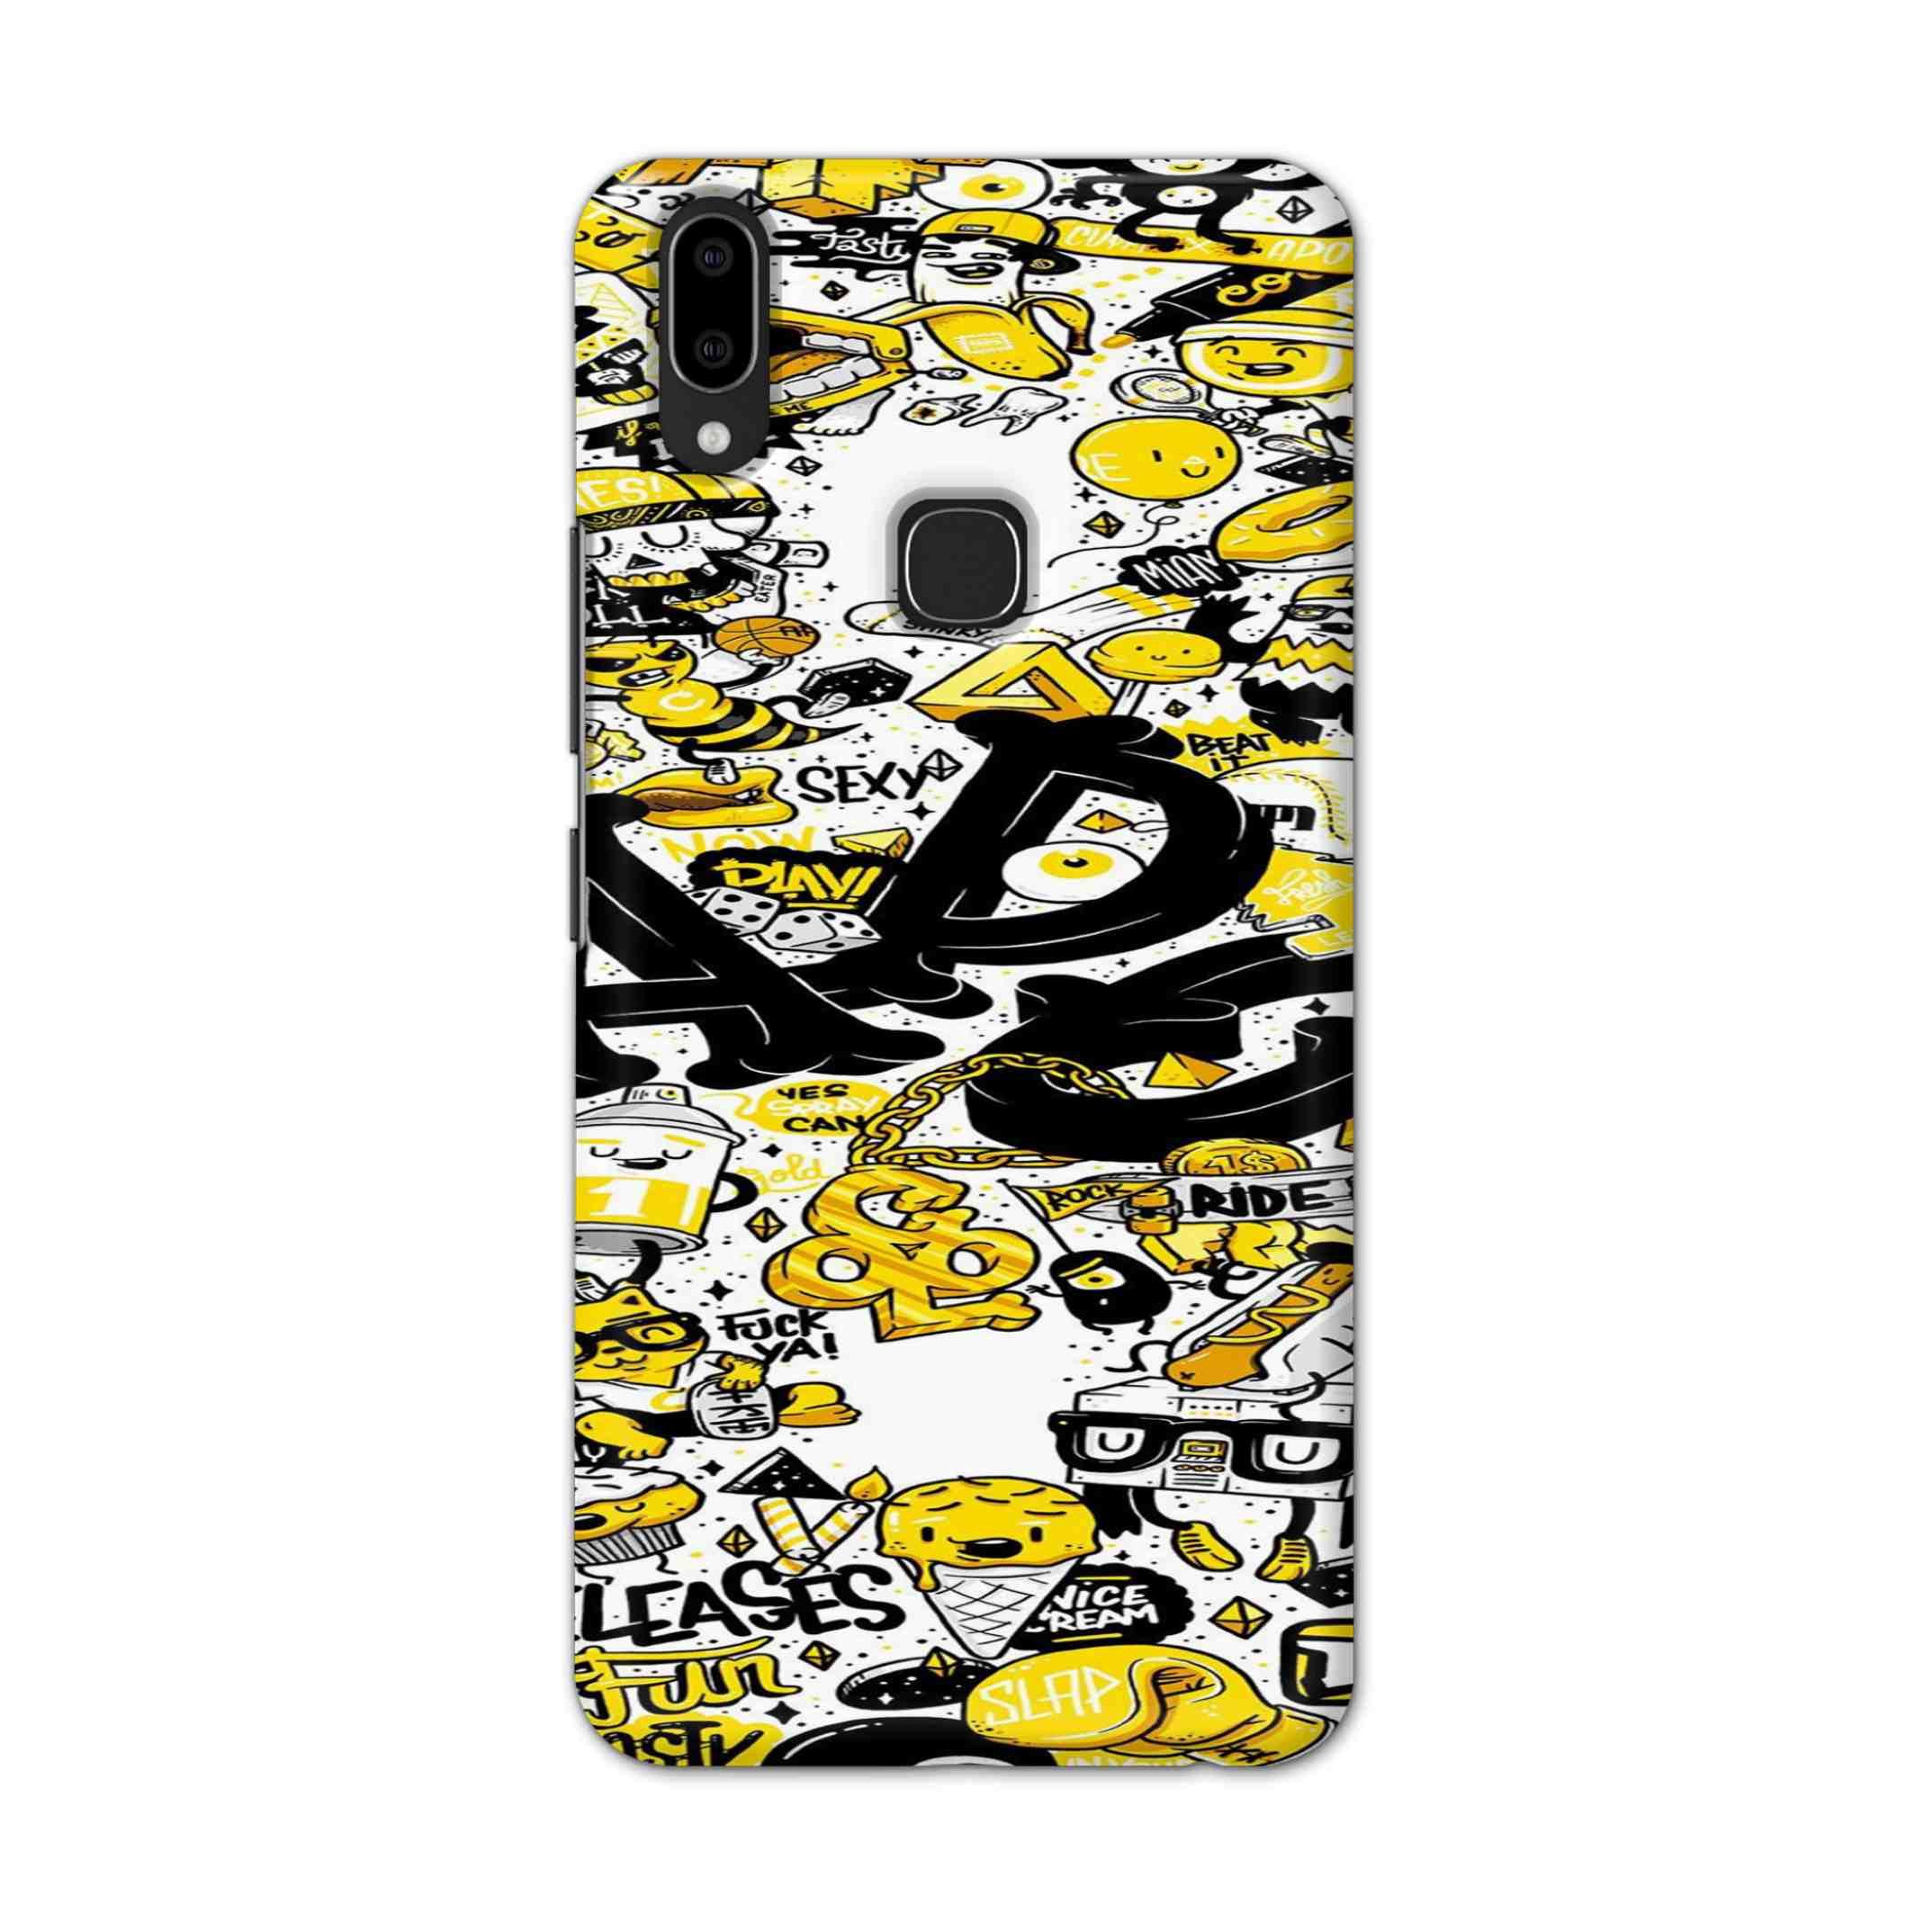 Buy Ado Hard Back Mobile Phone Case Cover For Vivo V9 / V9 Youth Online